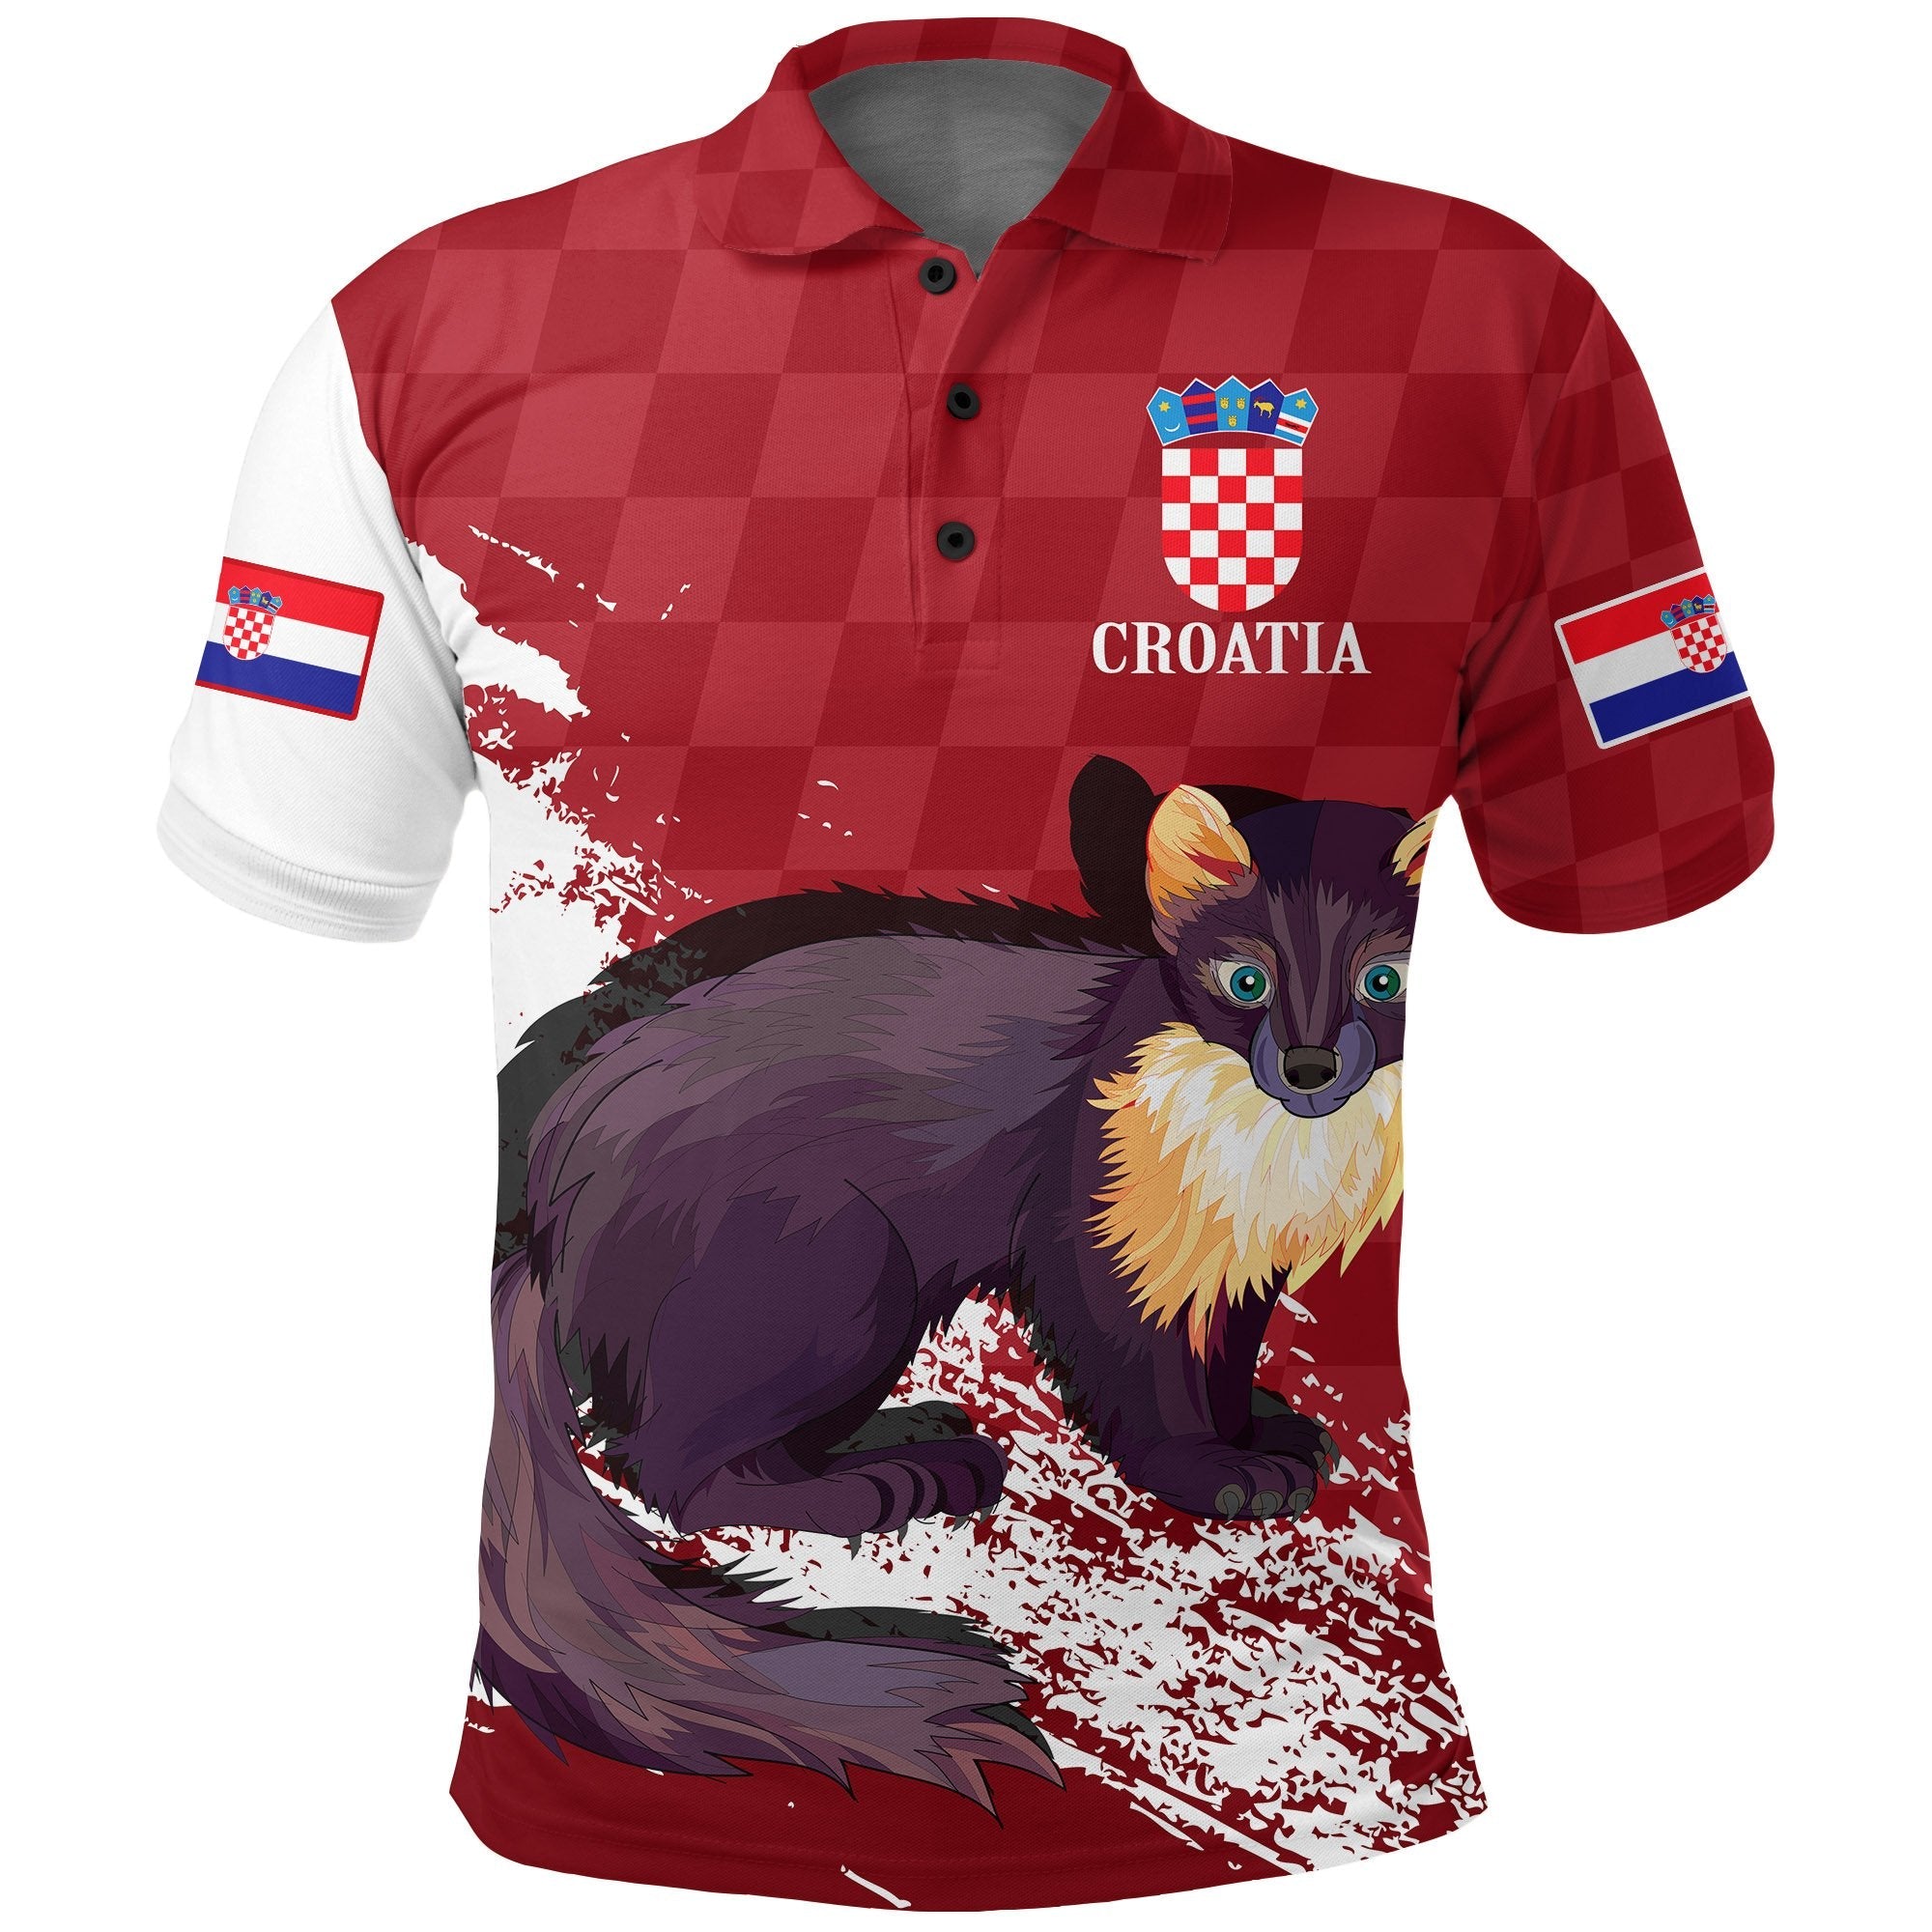 hrvatska-croatia-polo-shirt-marten